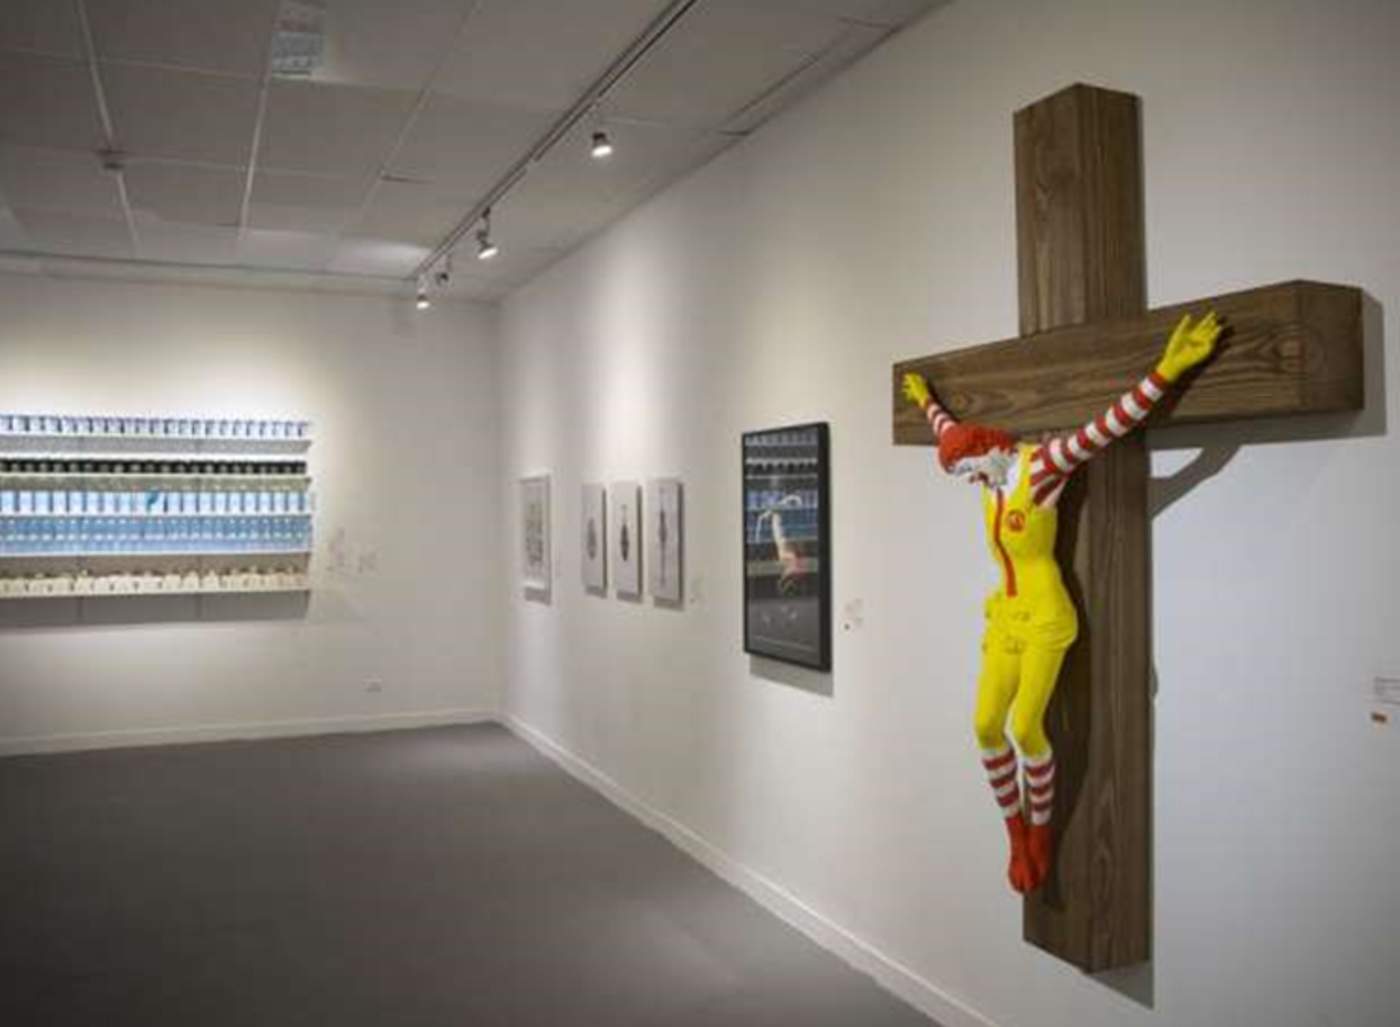 Exhibición de arte con alusión a la religión enfurece a devotos